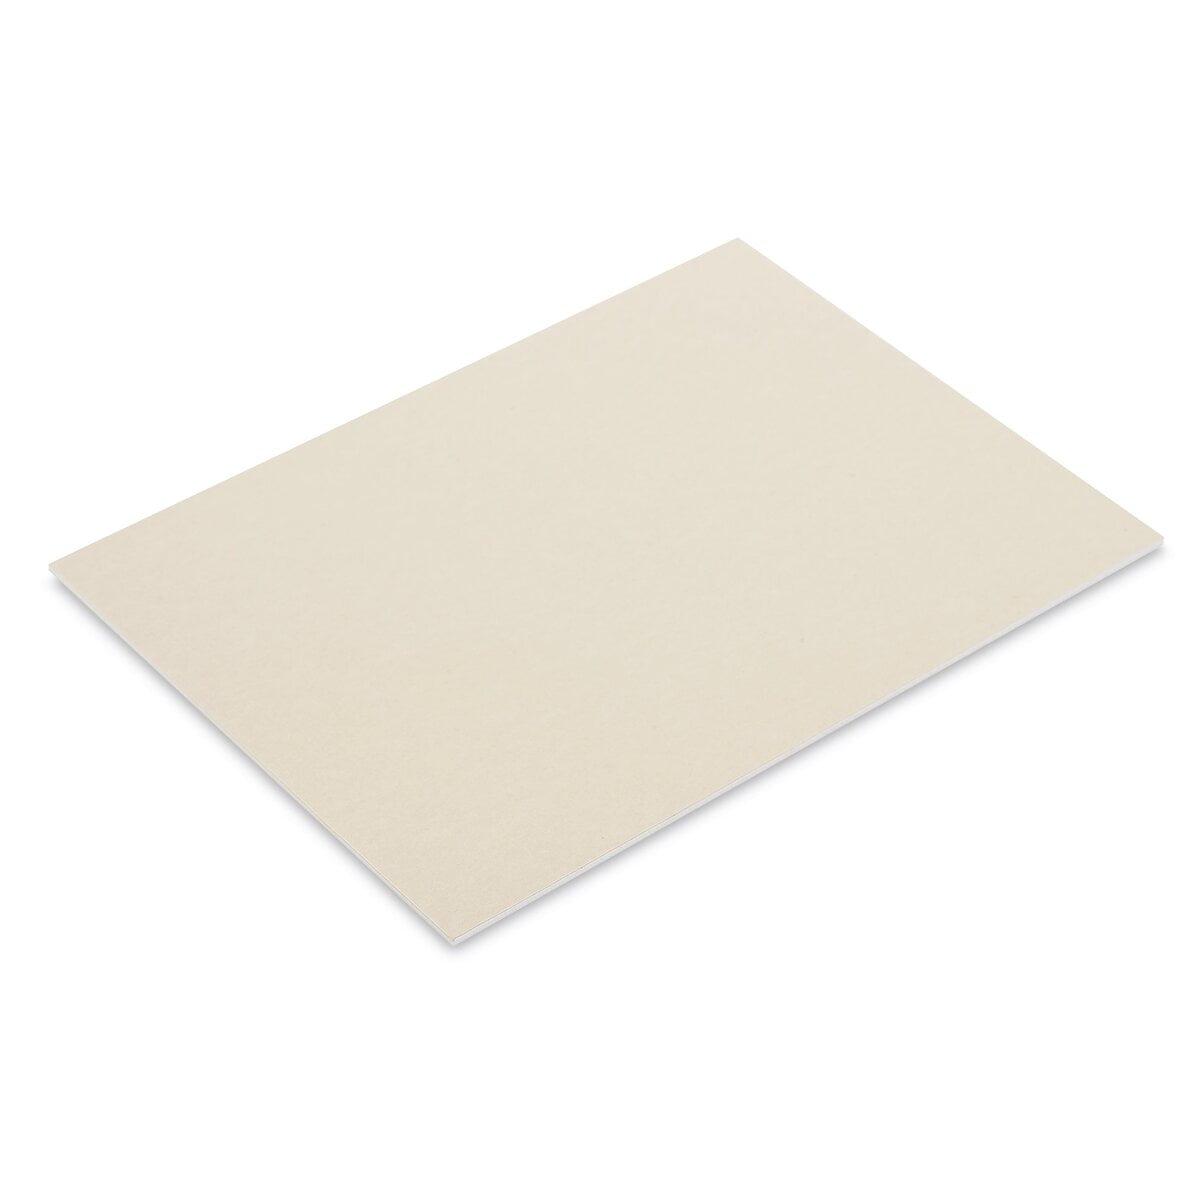  UART Premium Sanded Dark Pastel Art Pads for Pastels